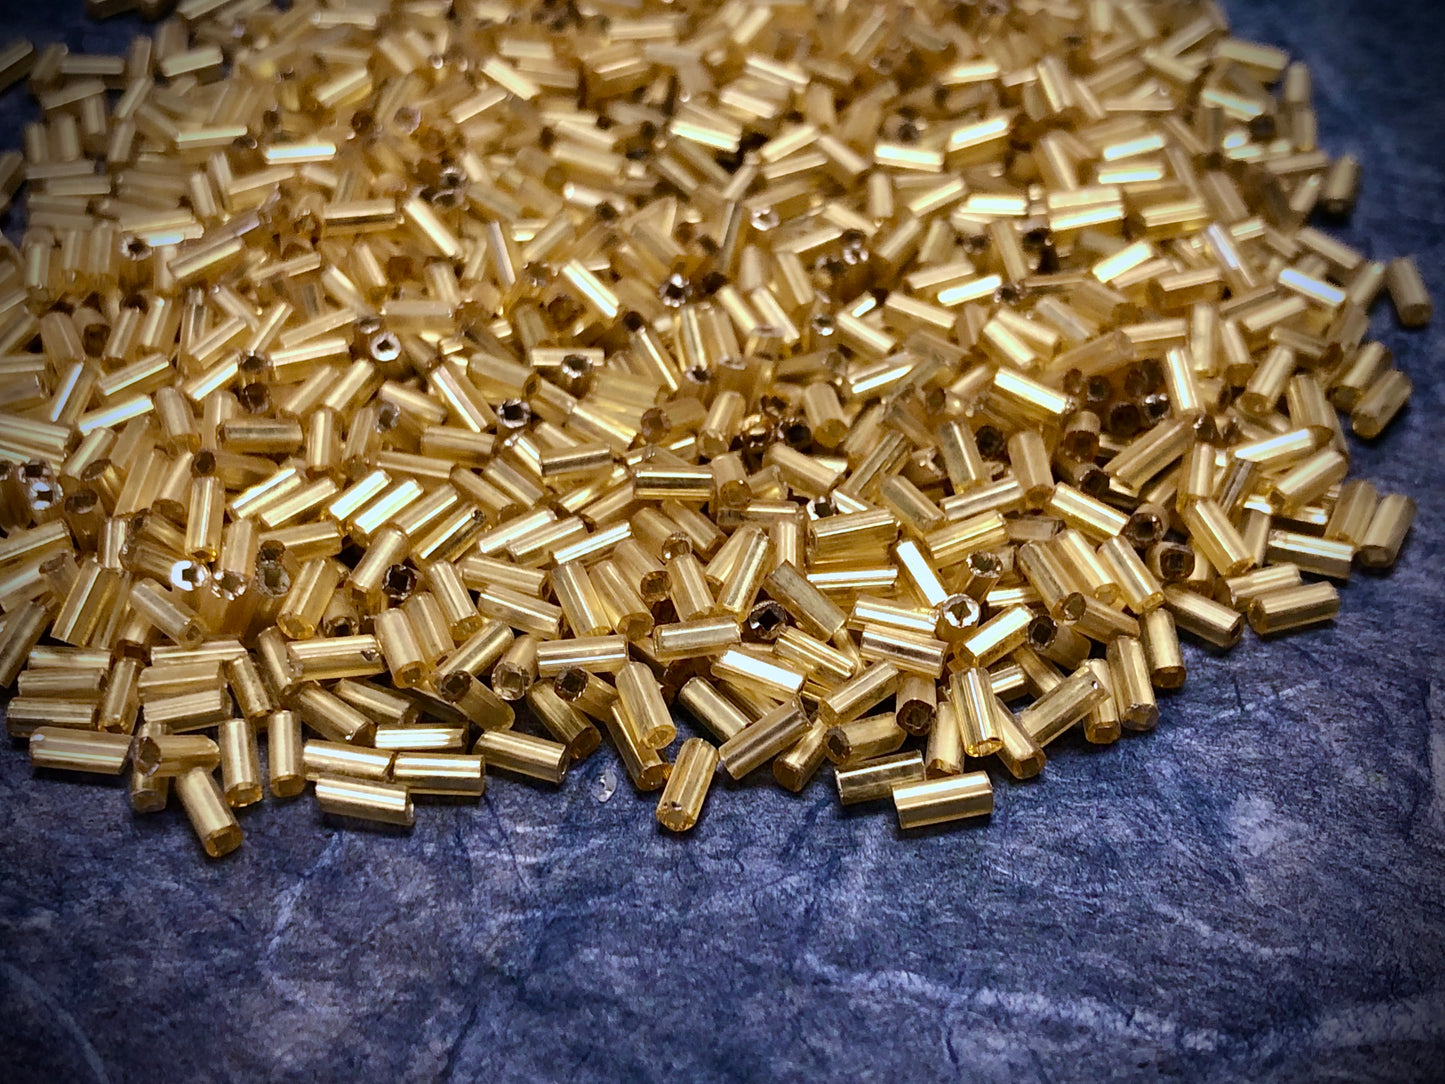 Vintage Japanese Gold Bugle Beads - 4mm x 2mm - 1 oz pack